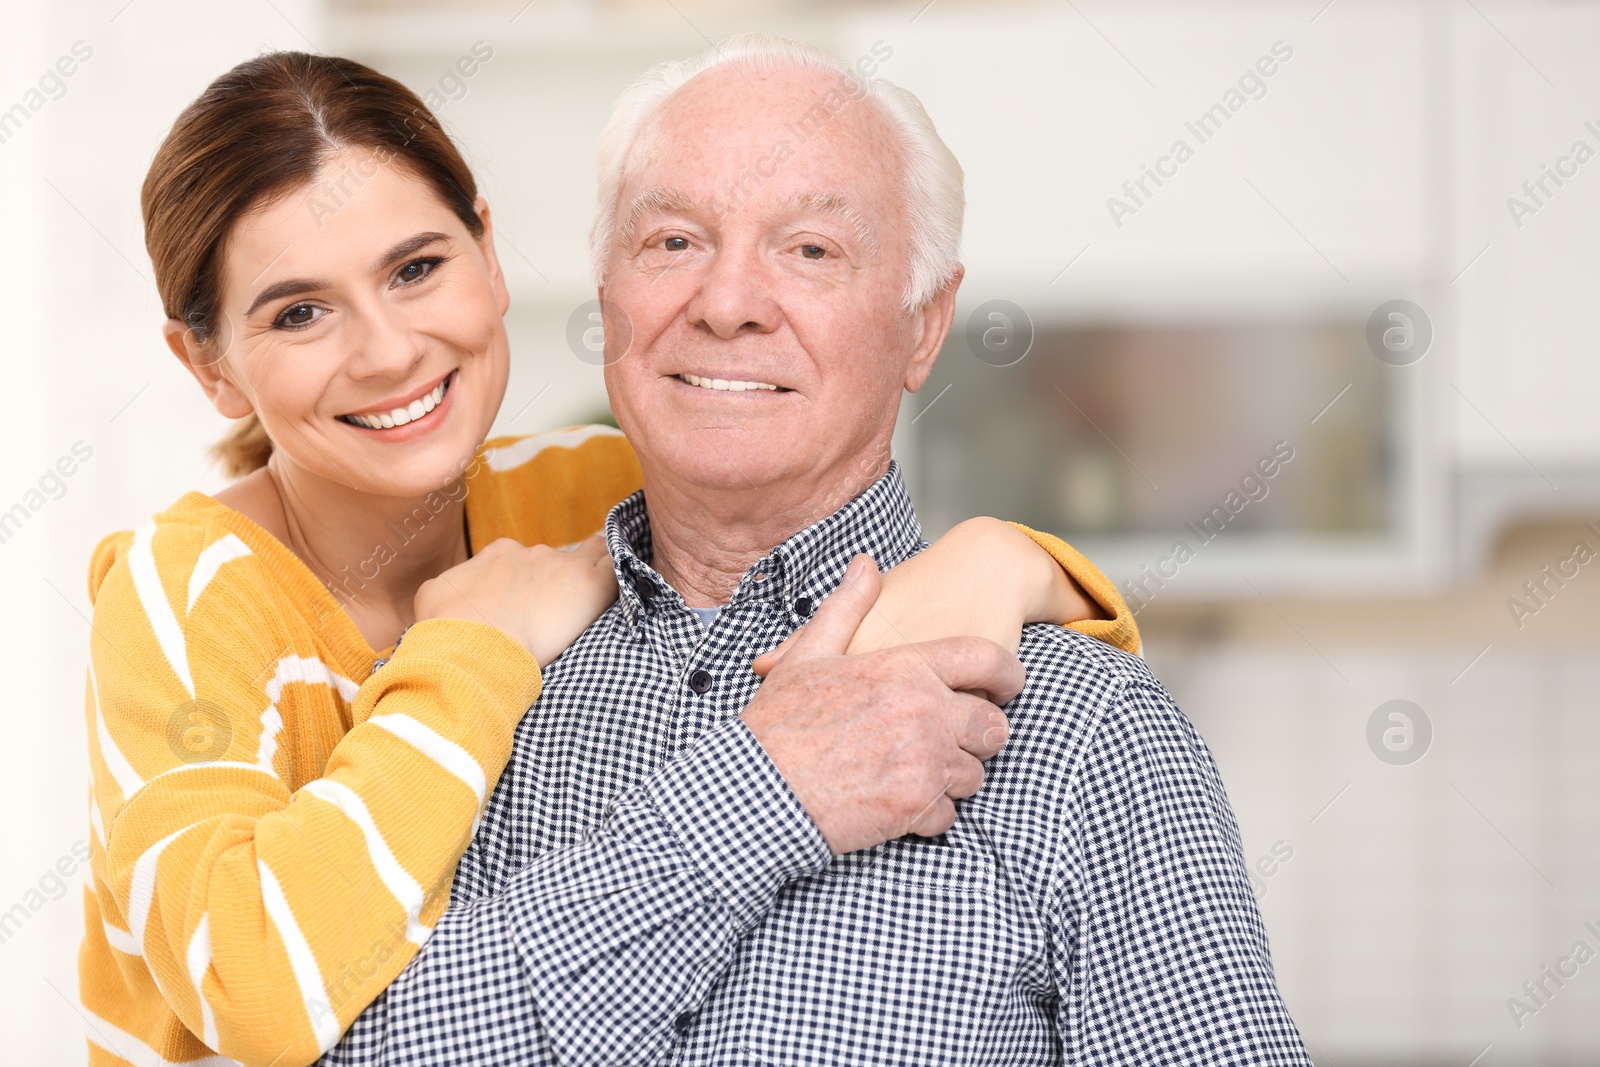 Photo of Elderly man with female caregiver in kitchen